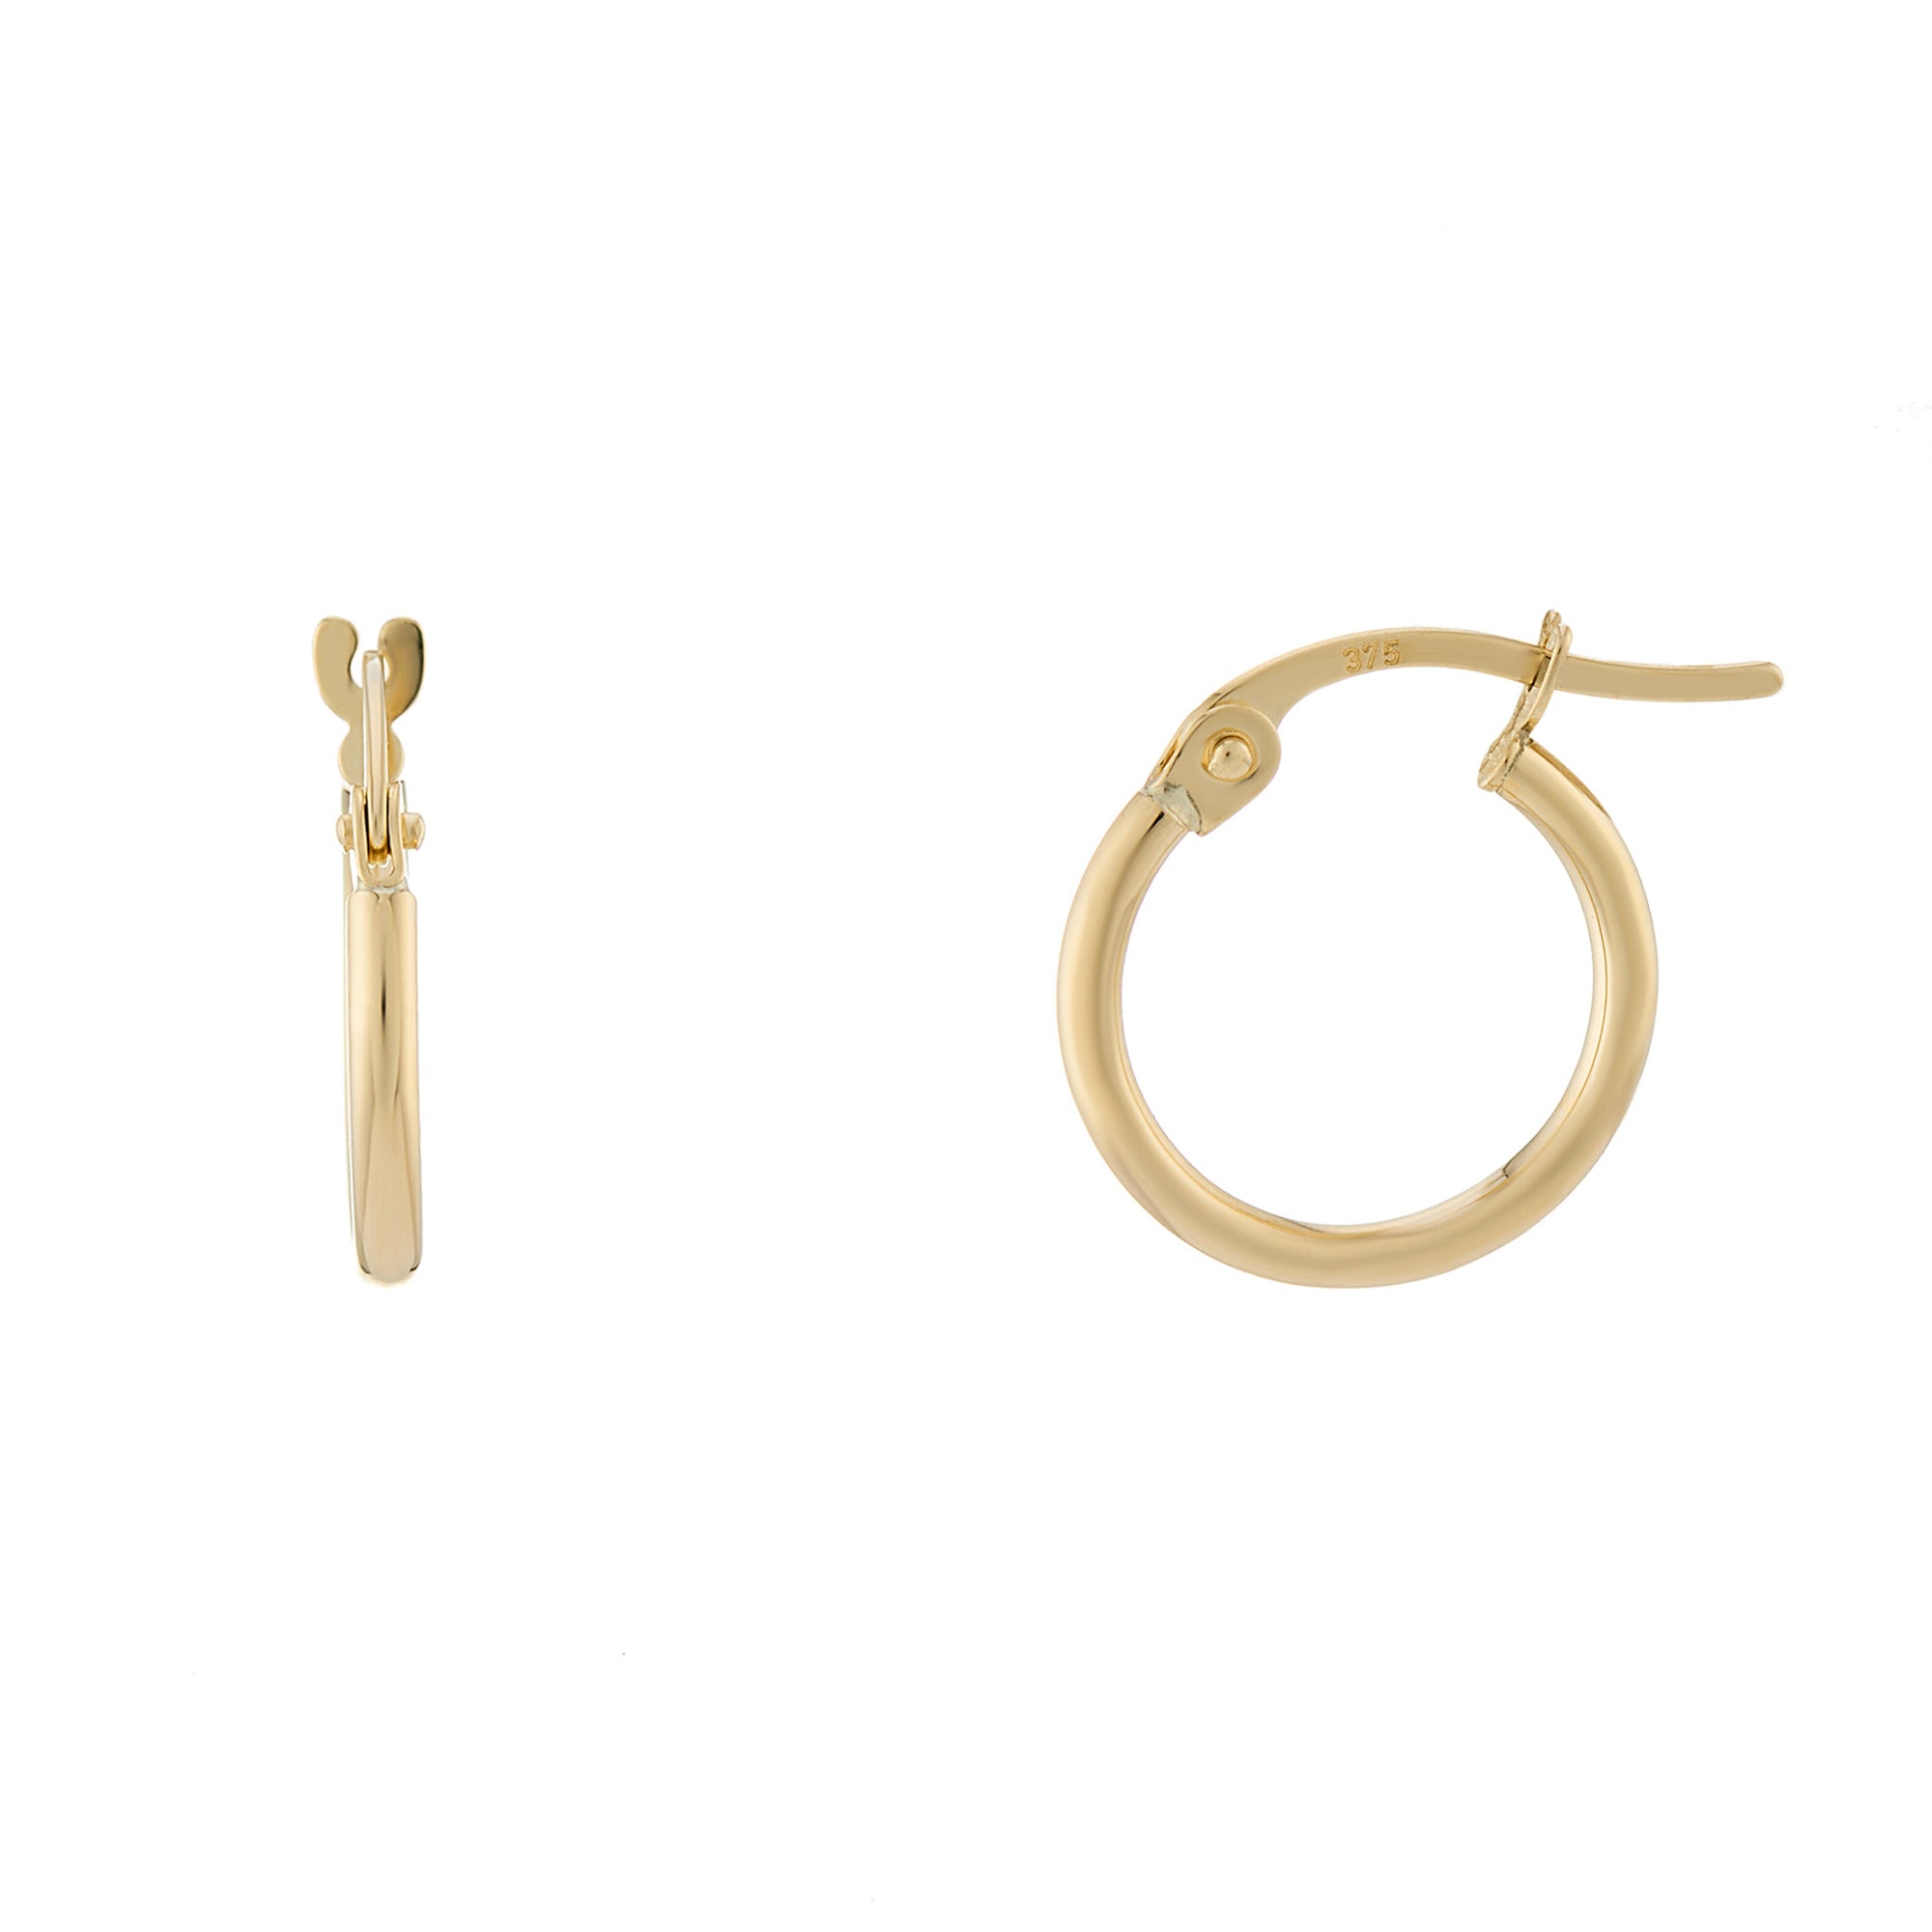 9ct gold 1.5mm x 10mm plain hoop earrings